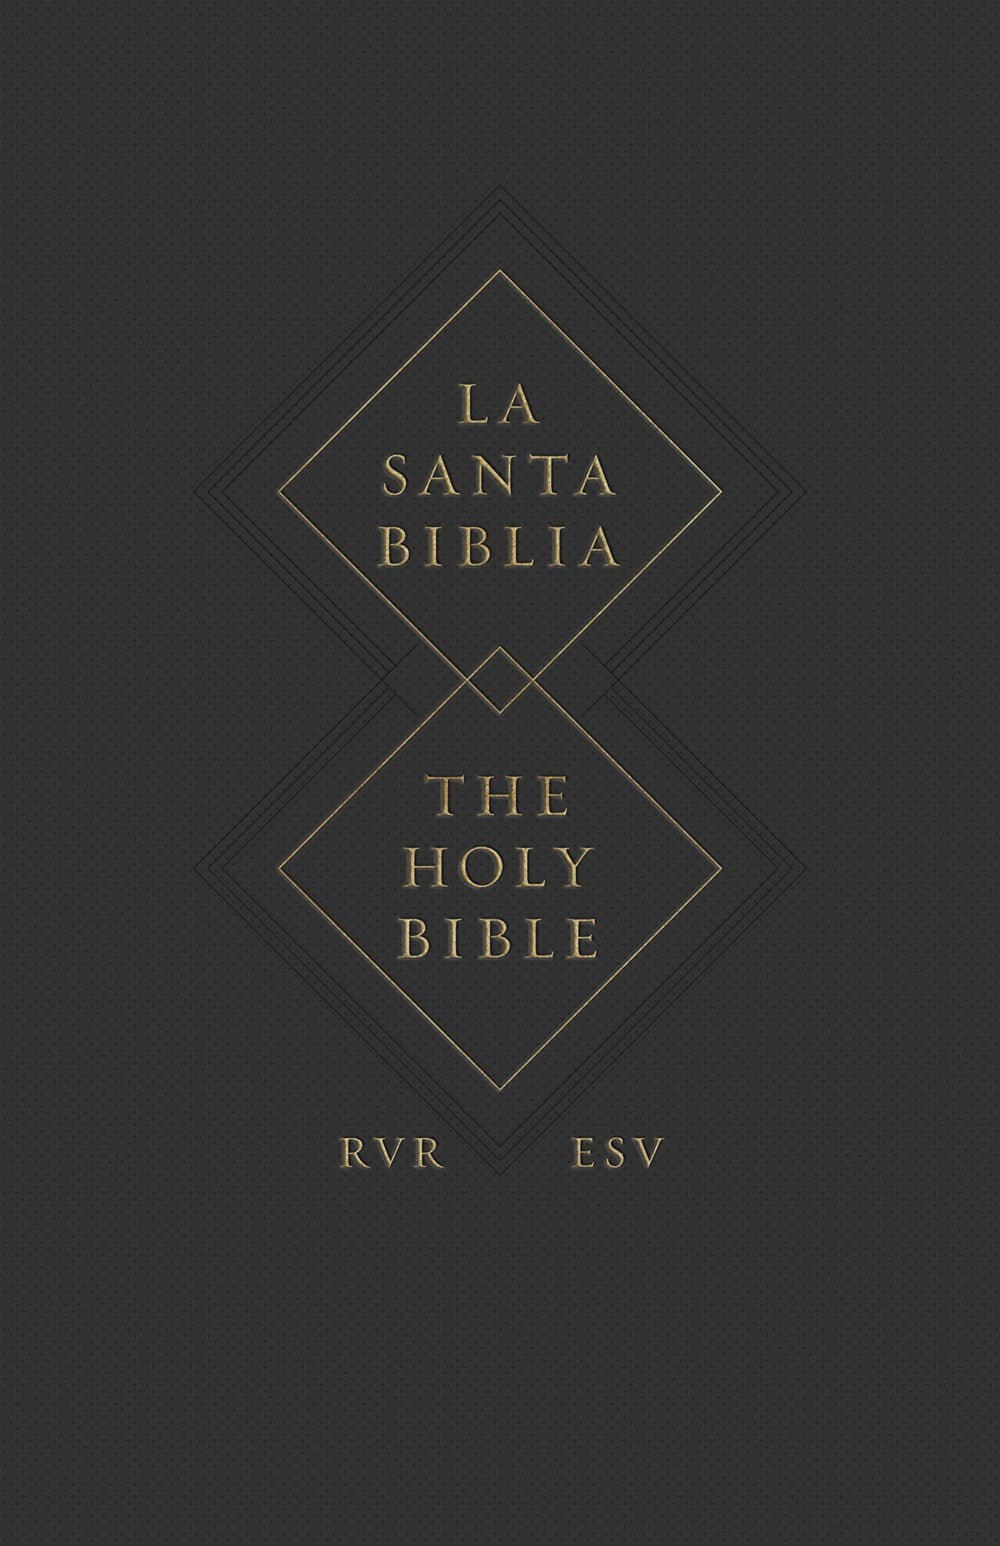 ESV Spanish/English Parallel Bible (La Santa Biblia RVR/The Holy Bible ESV)-Softcover